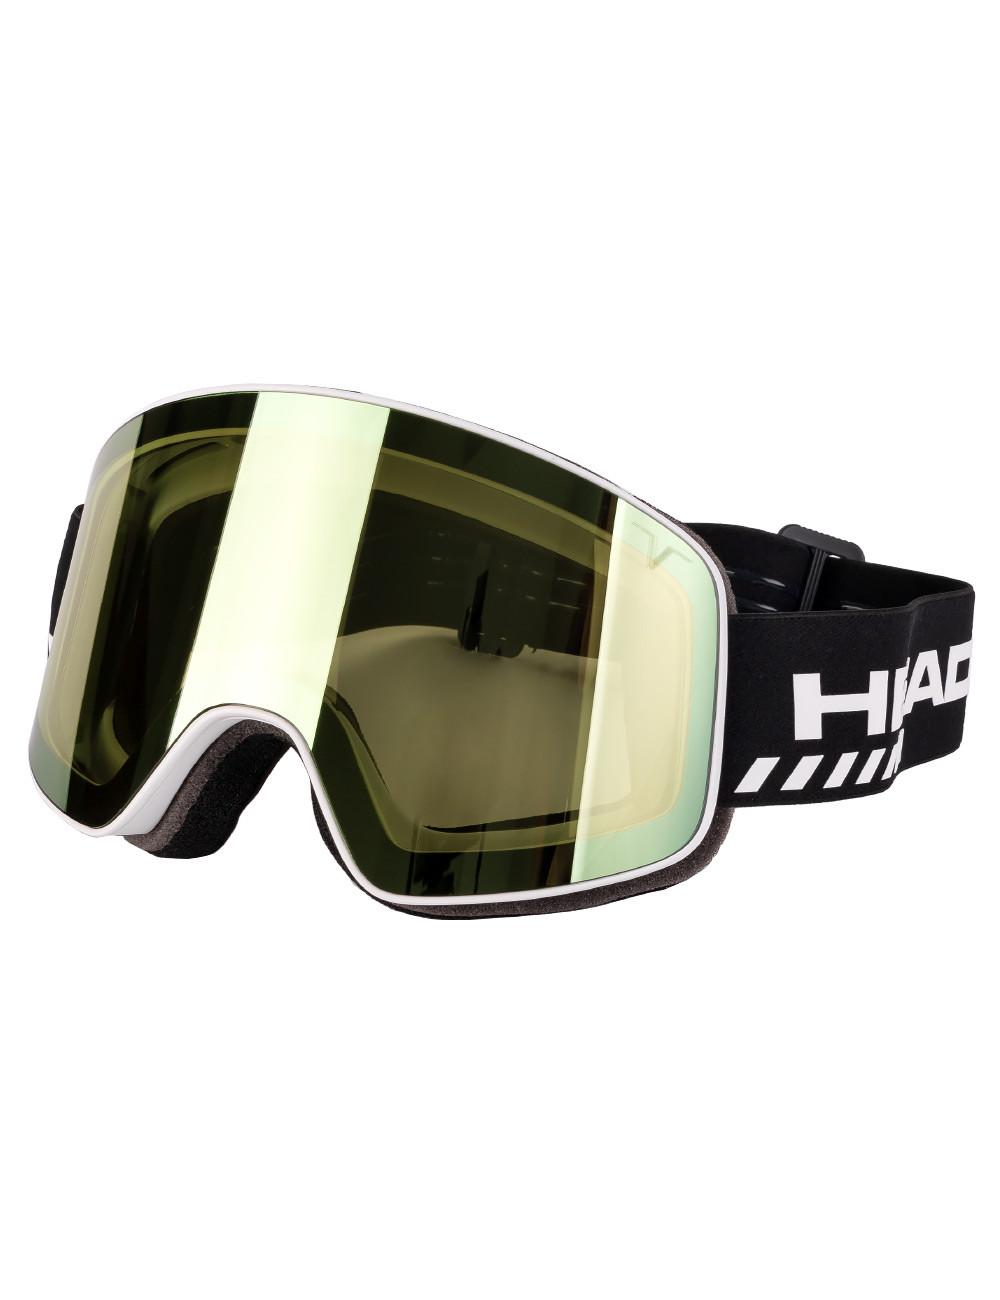 Gogle narciarskie Head Horizon TVT RACE